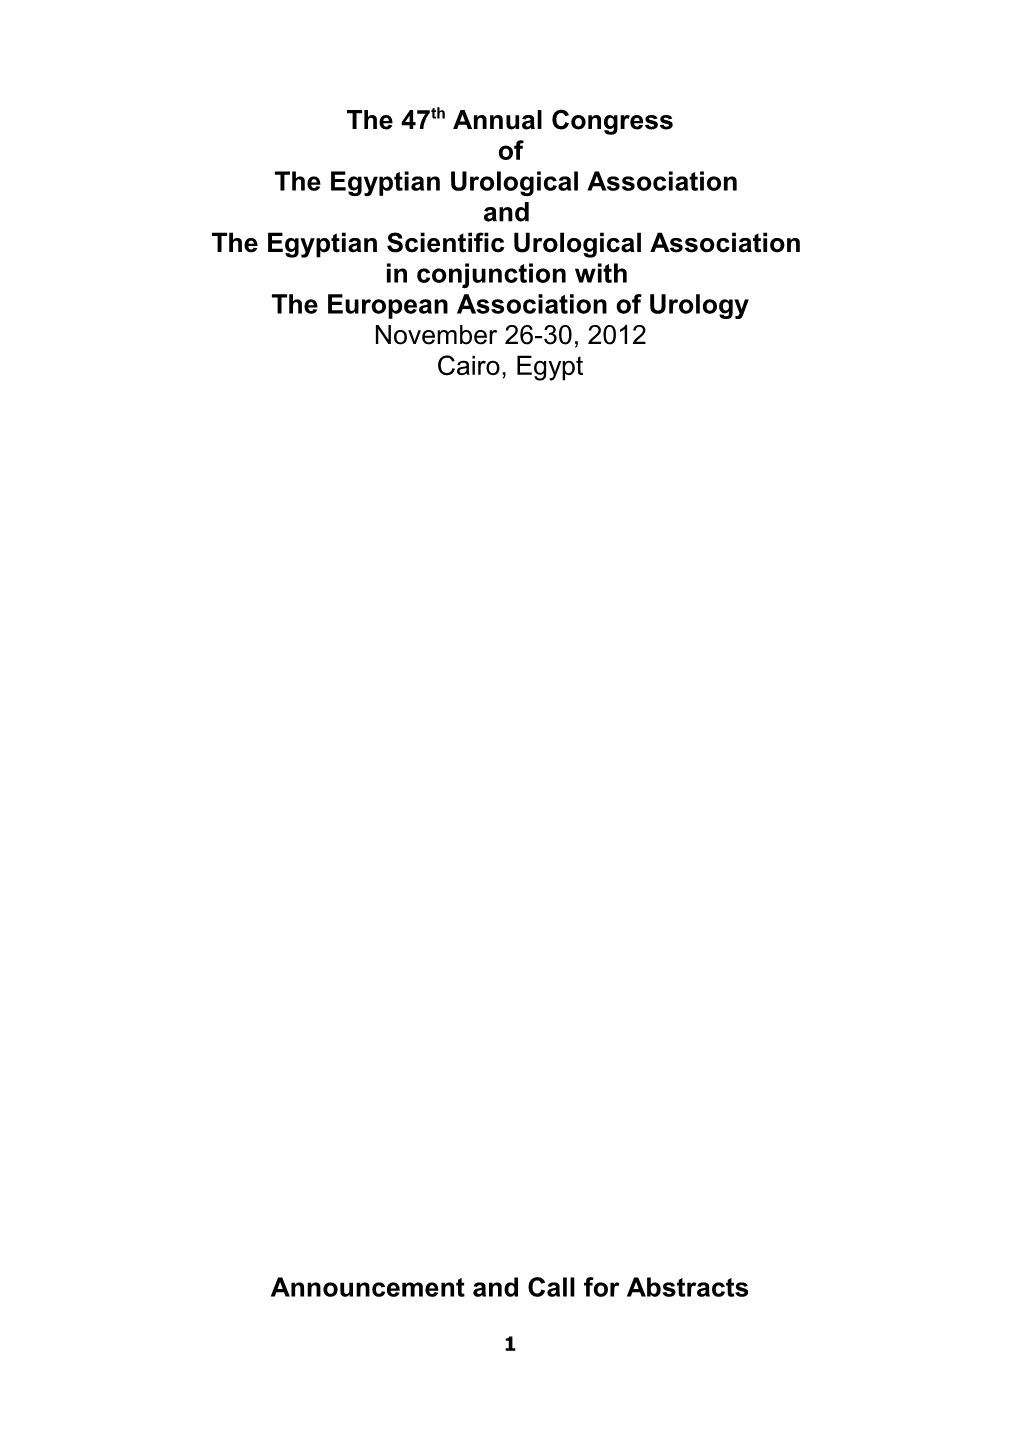 The Egyptian Urological Association